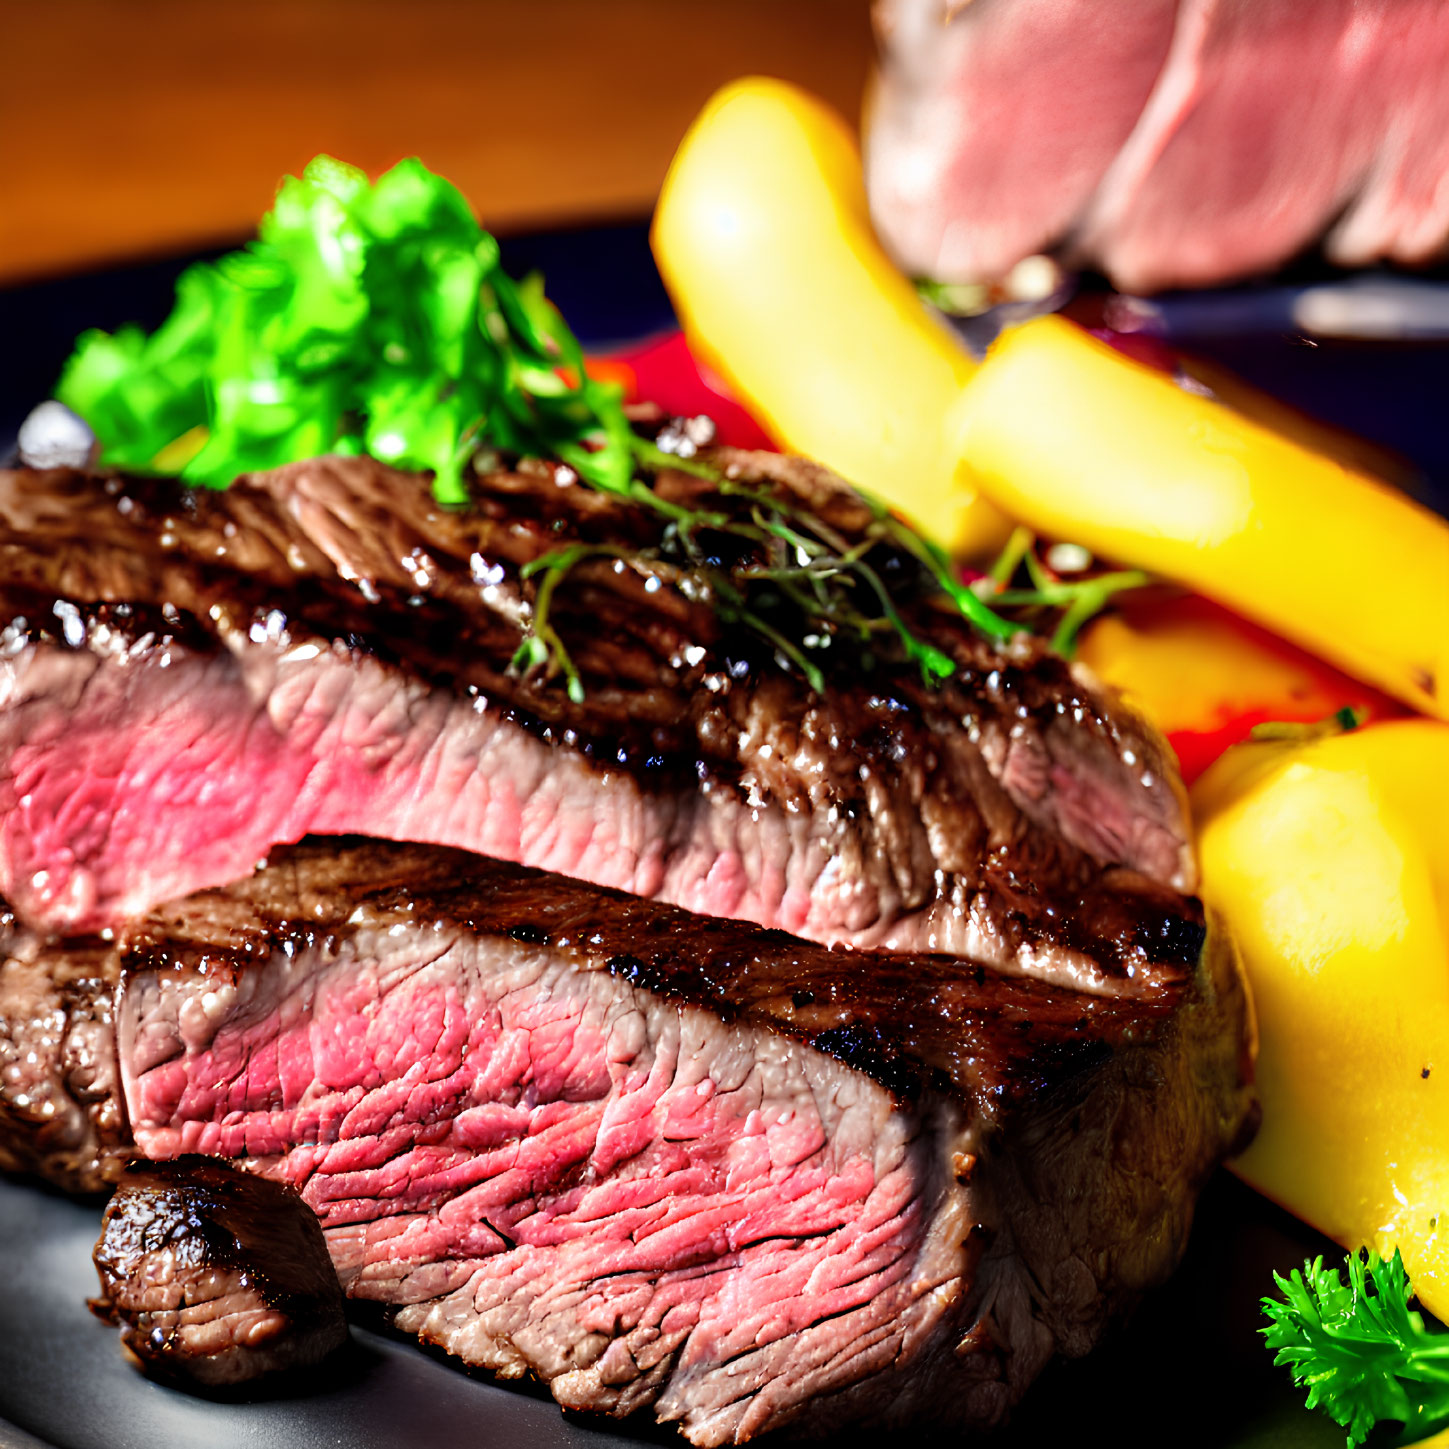 Sliced medium-rare steak with herbs, green salad, and yellow potatoes on dark plate